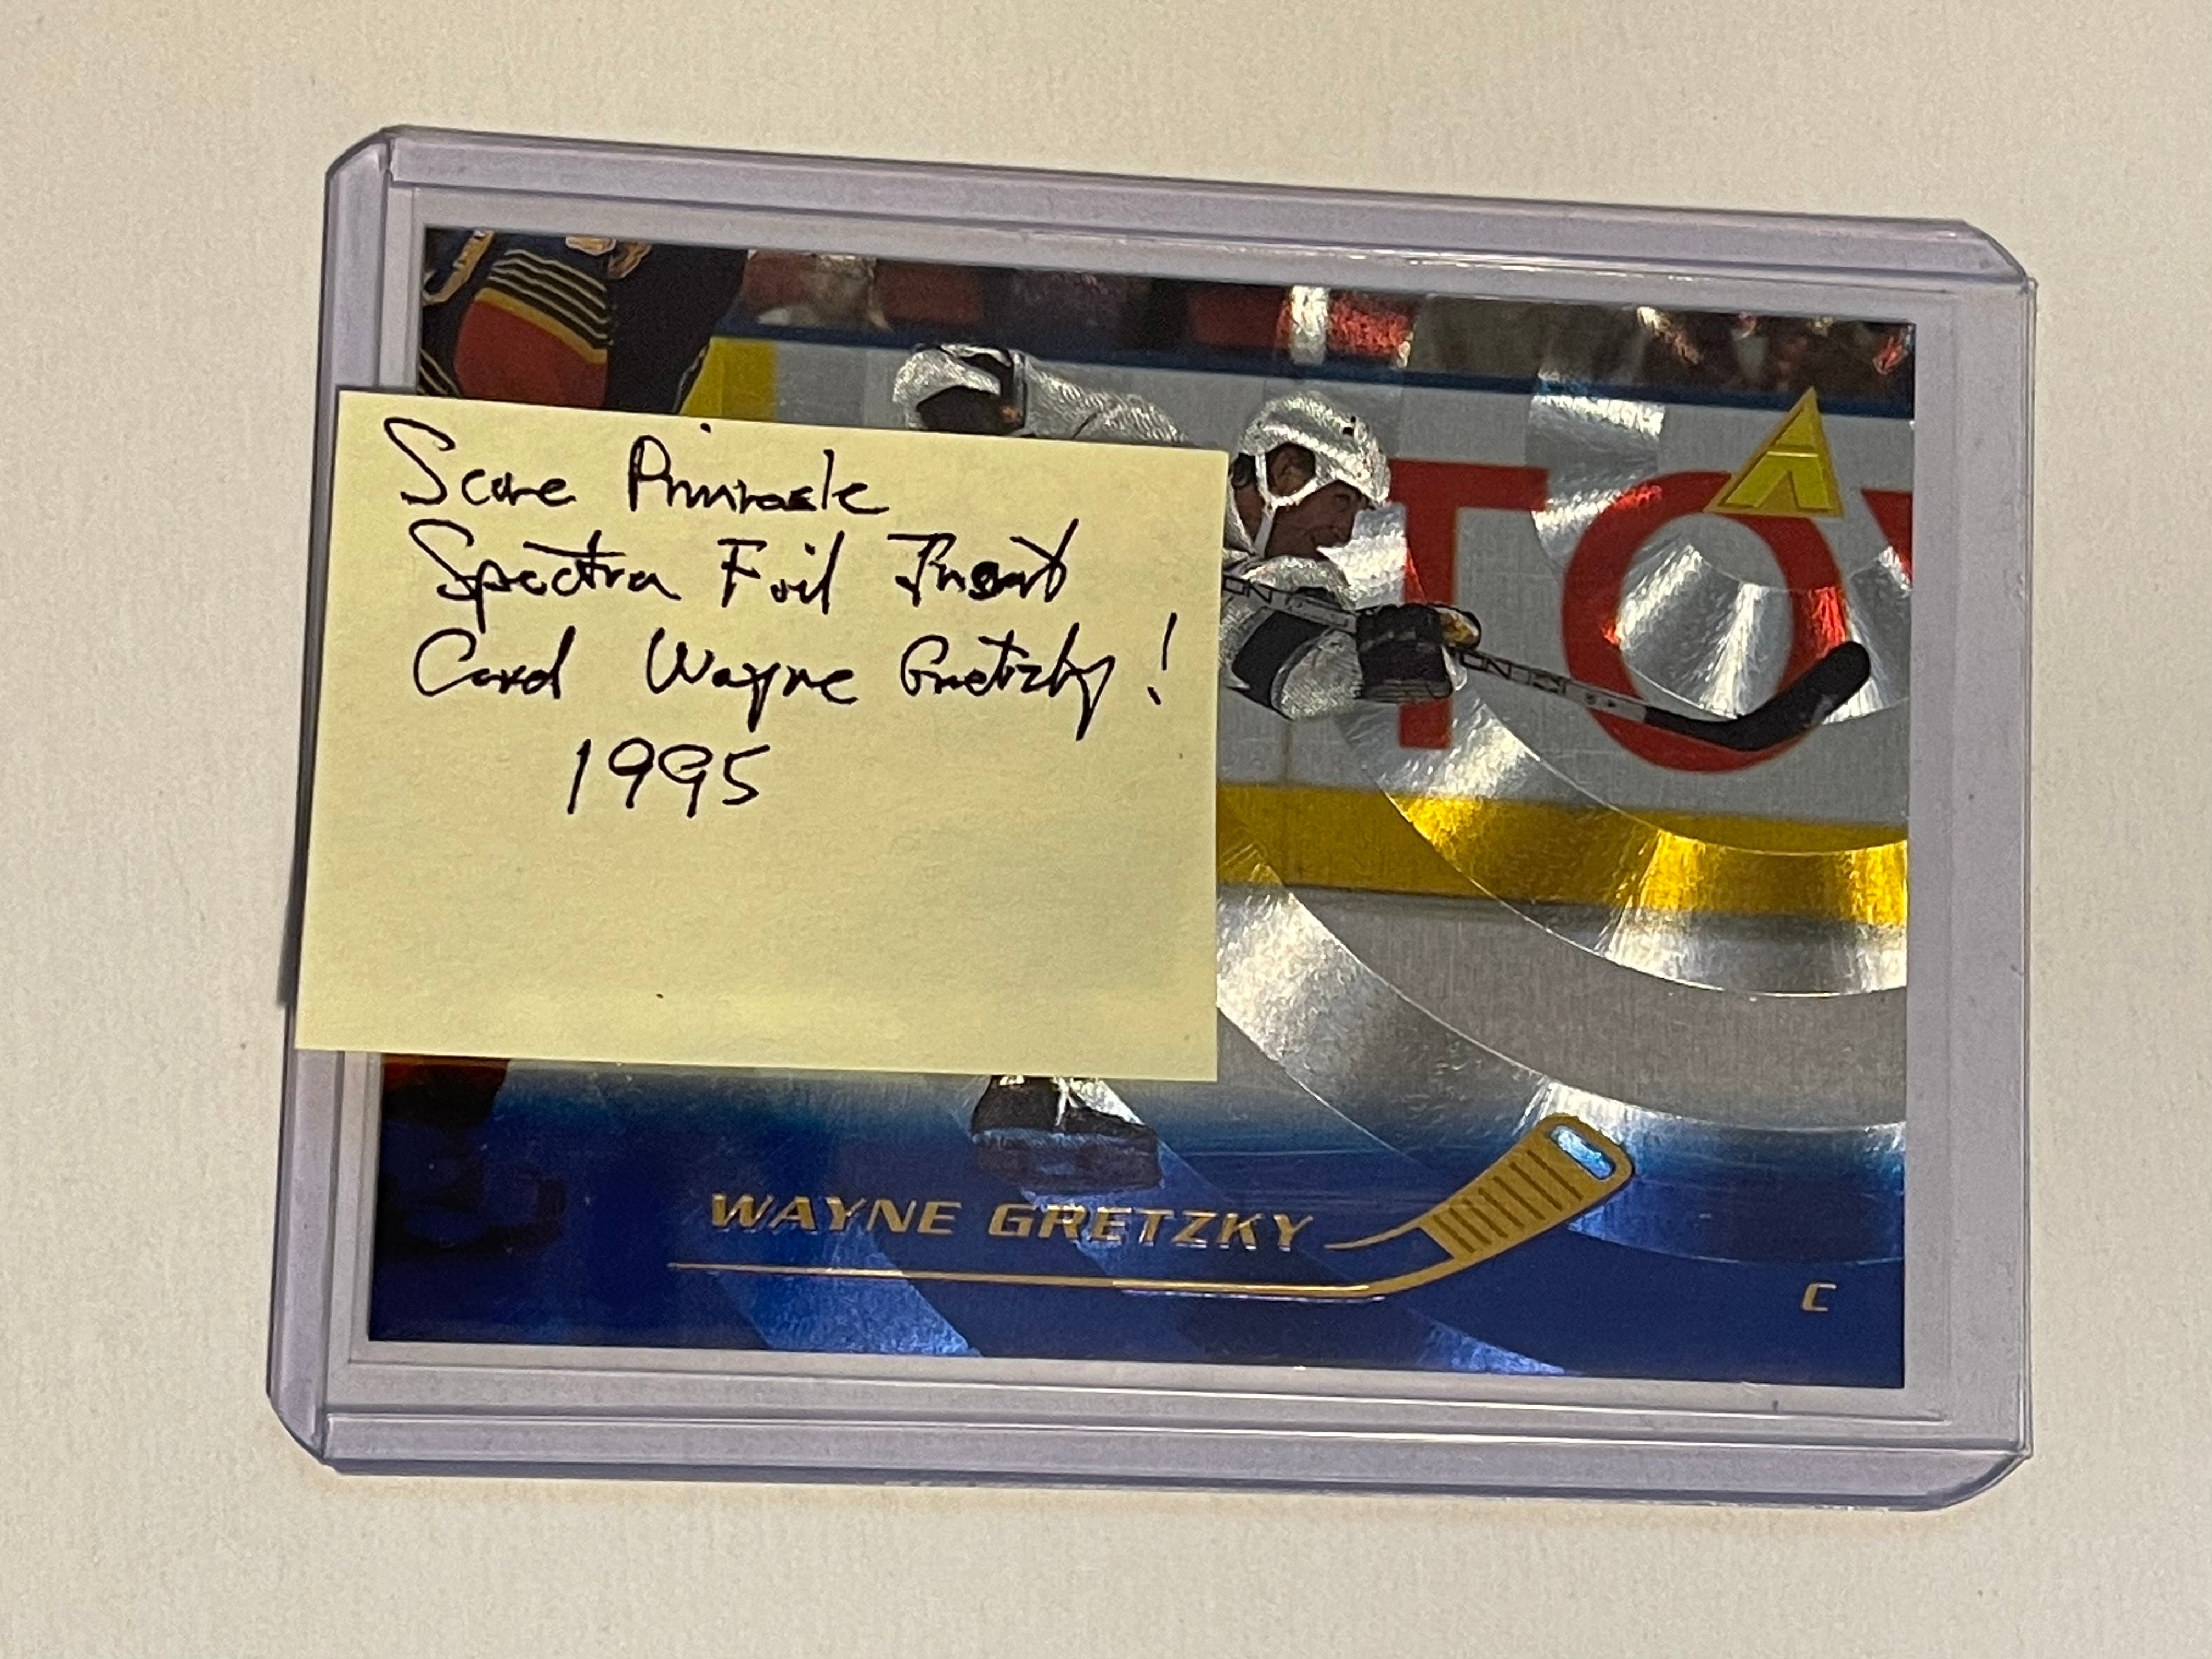 Wayne Gretzky rare pinnacle spectra foil insert hockey card 1995